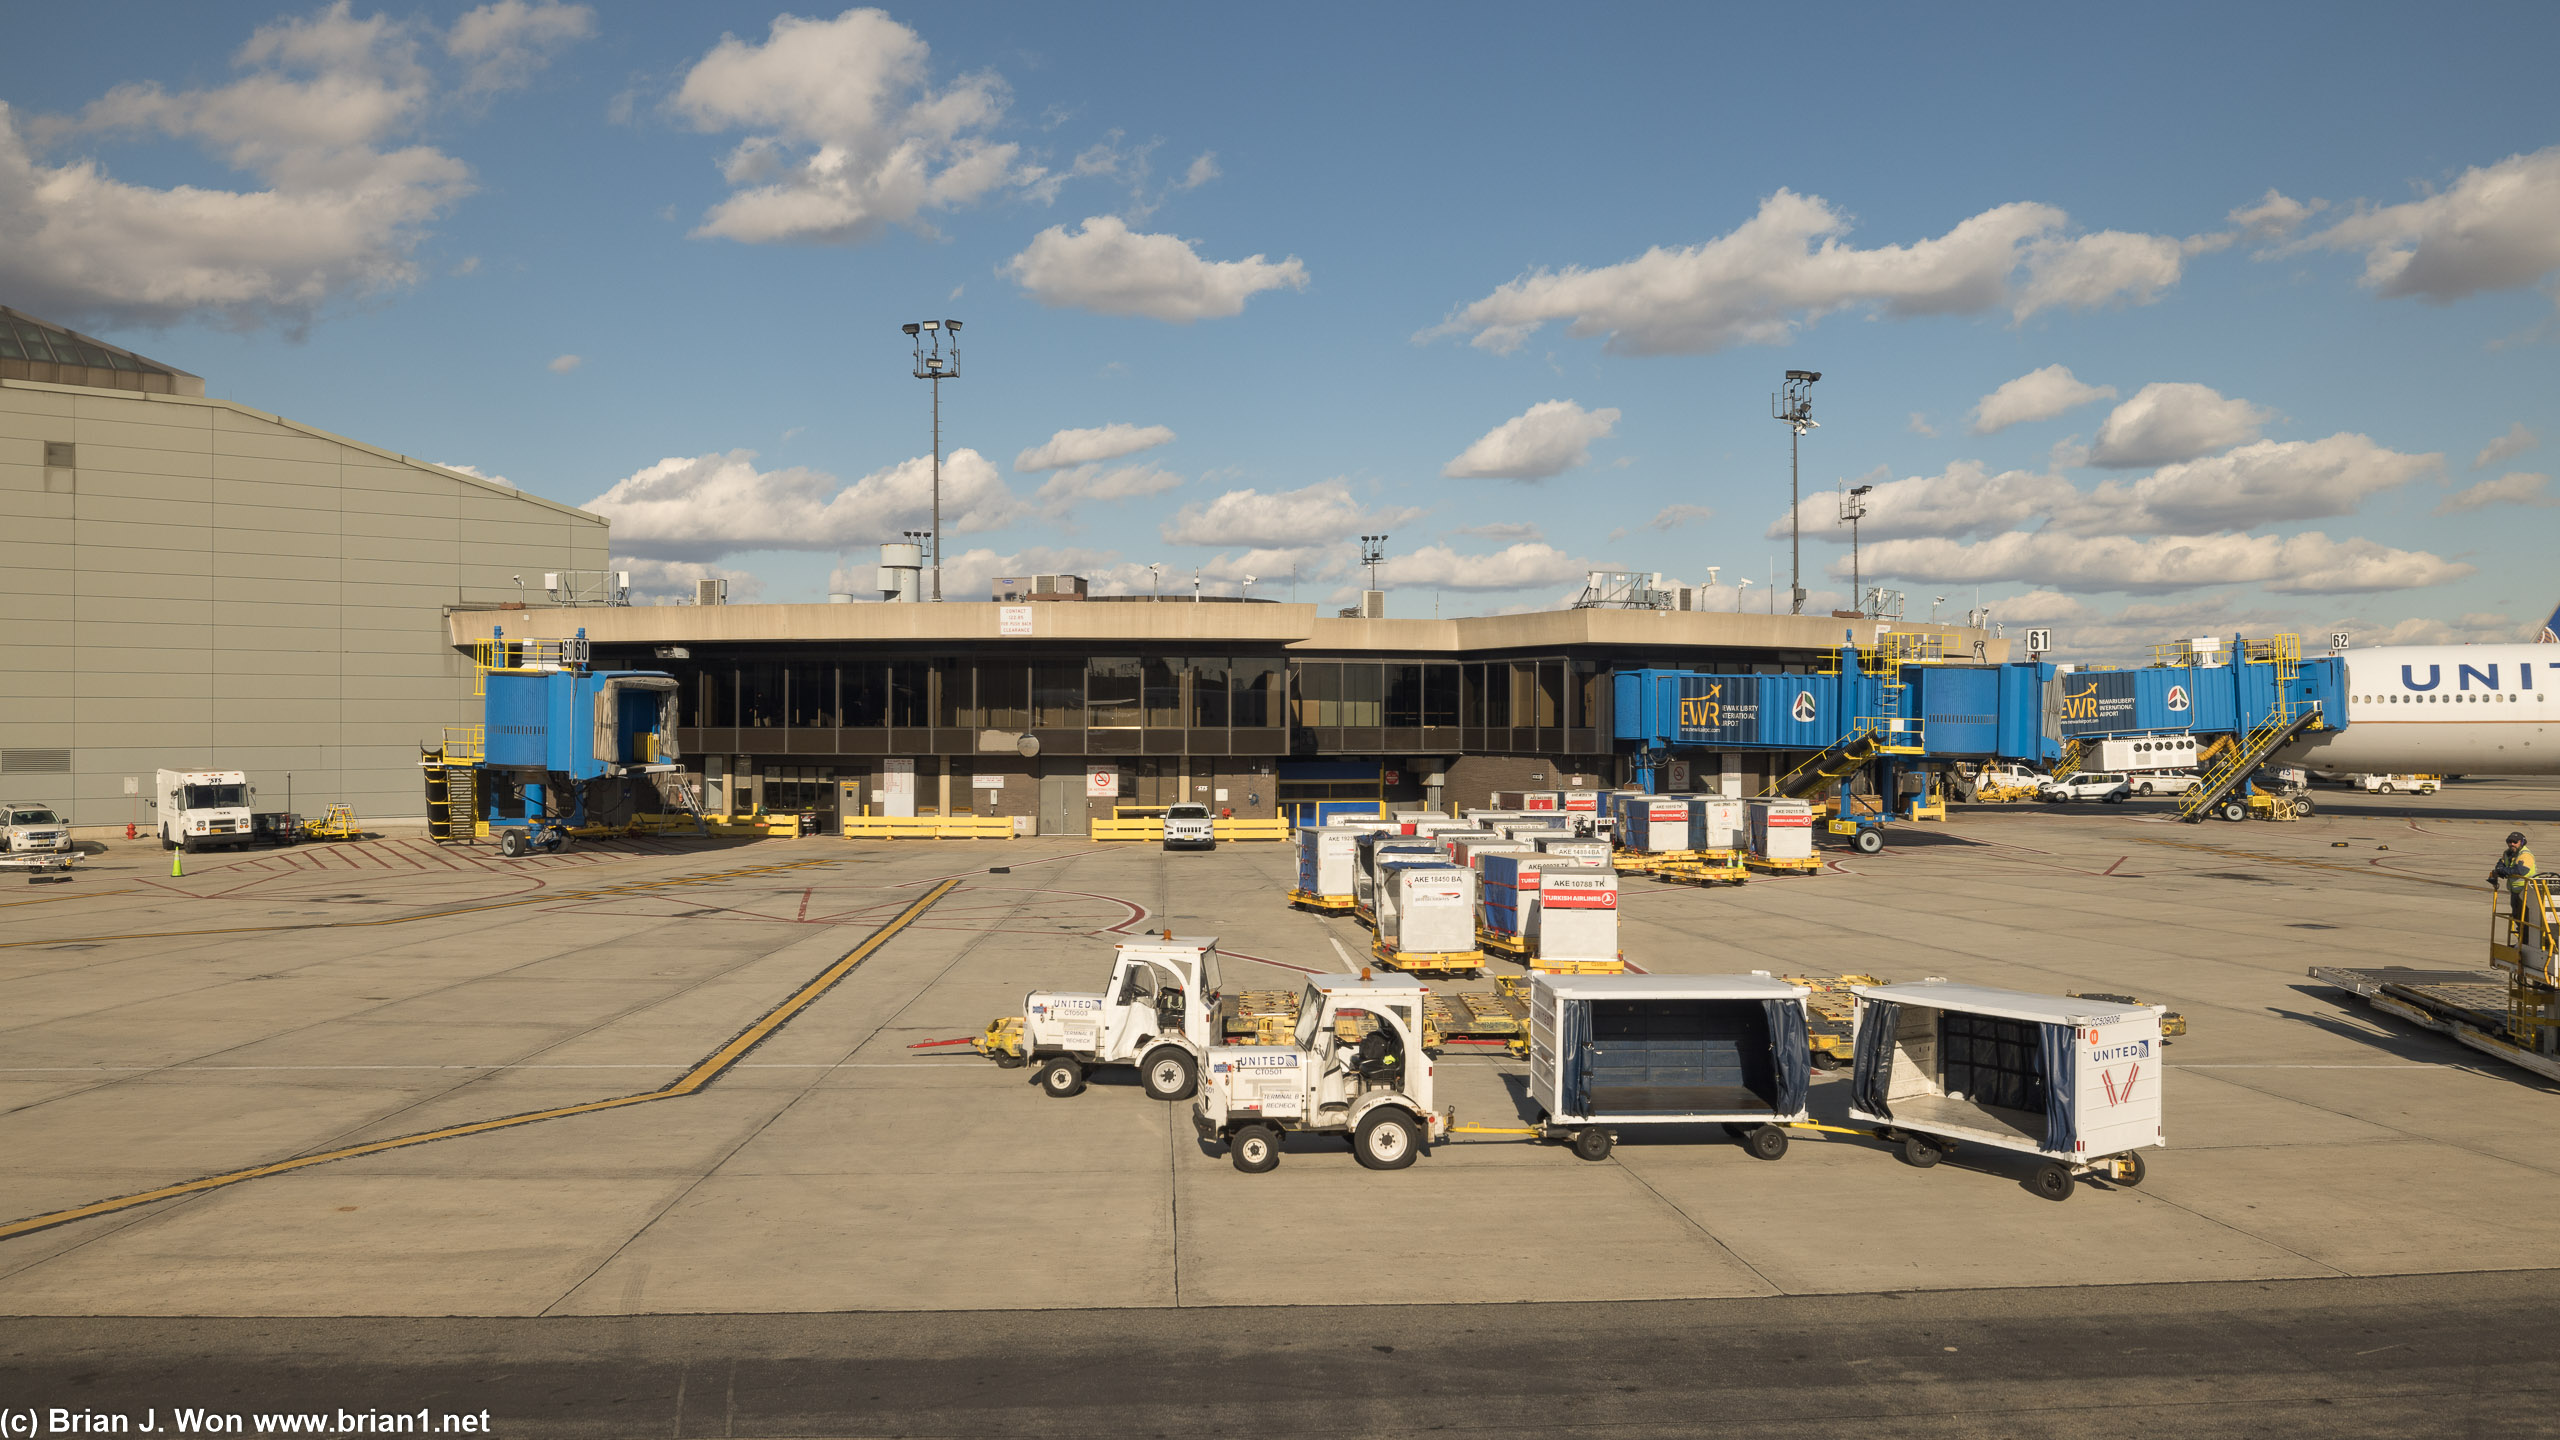 Arrival at Terminal B, Newark International Airport.